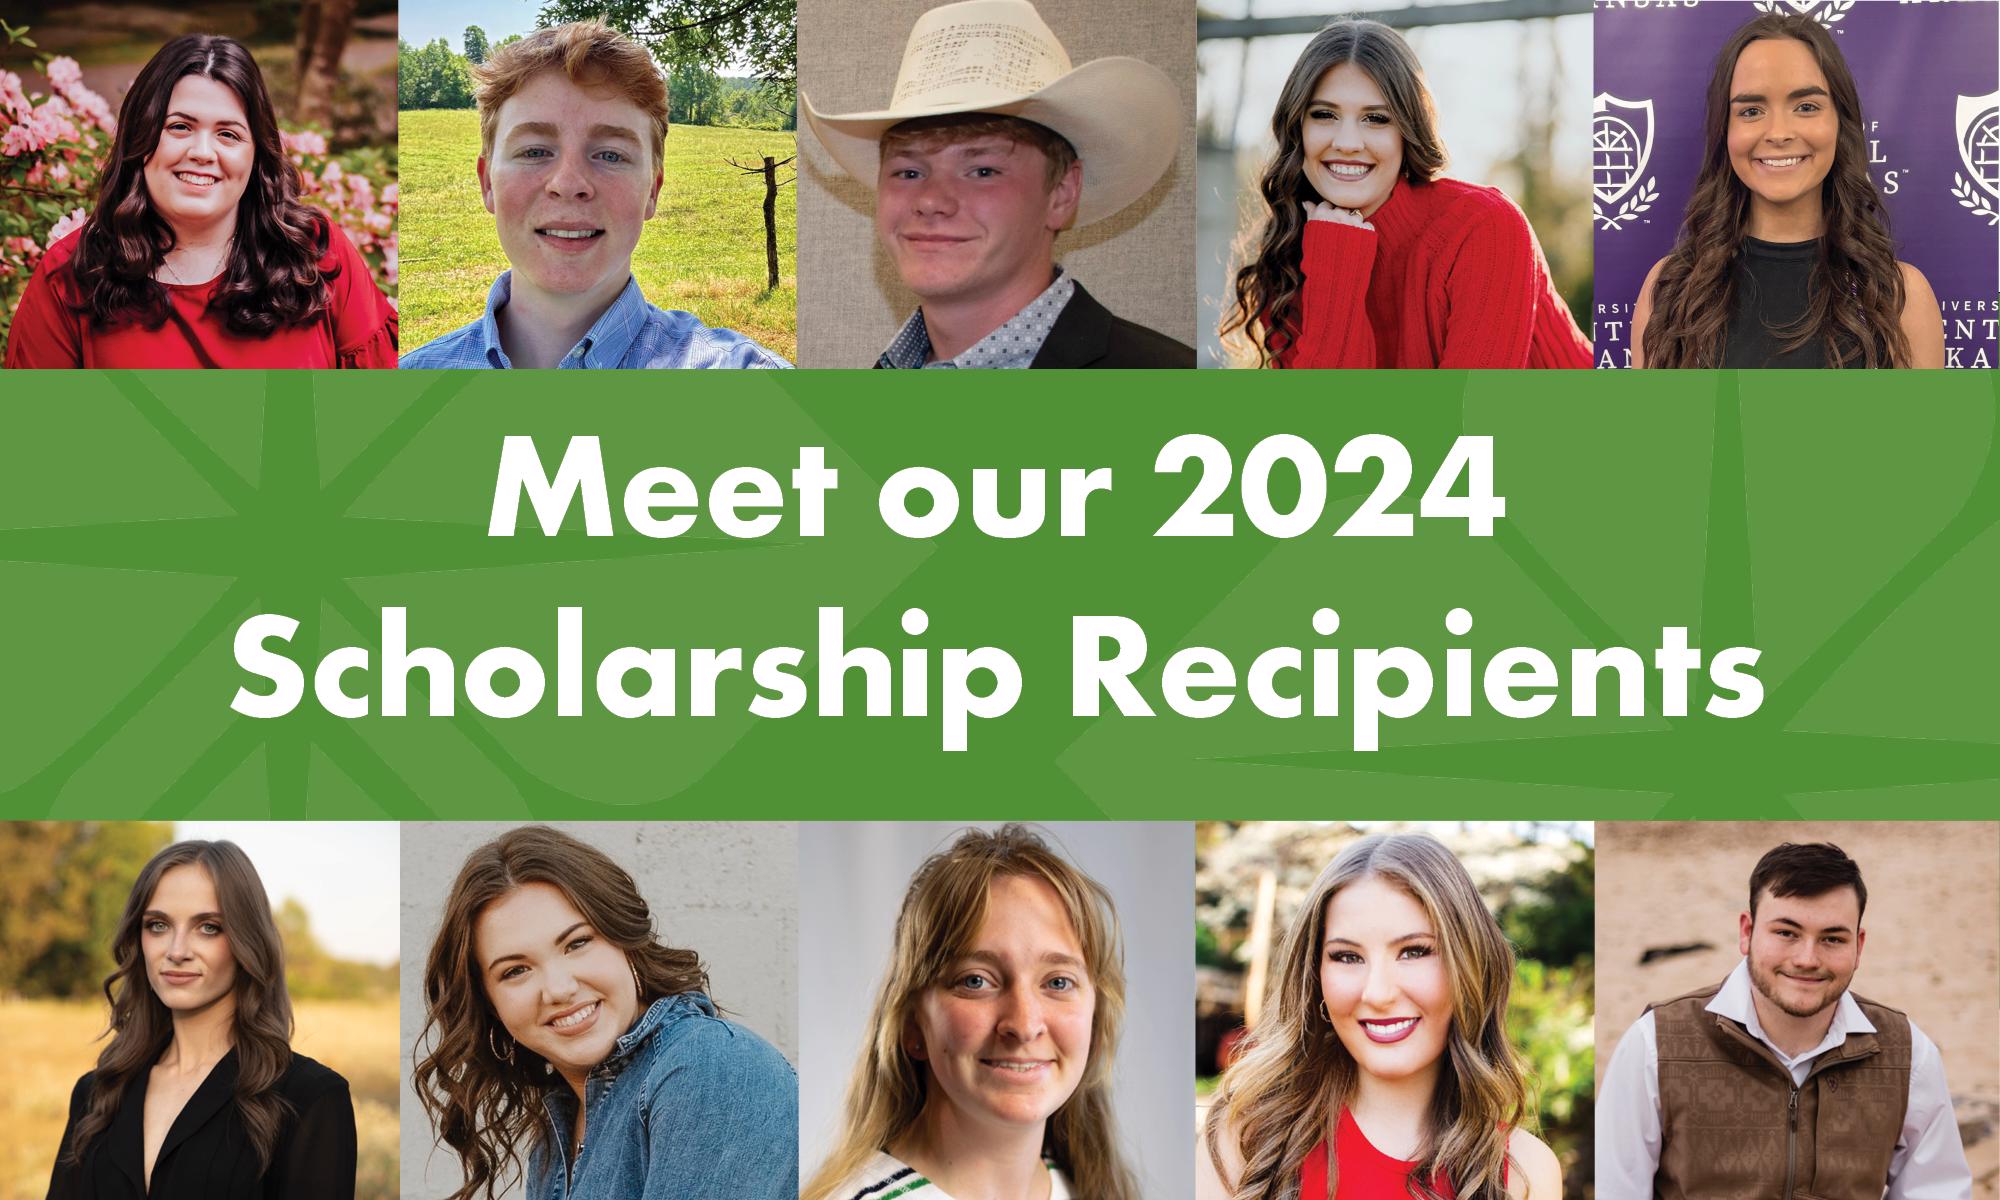 Meet our 2024 Scholarship Recipients